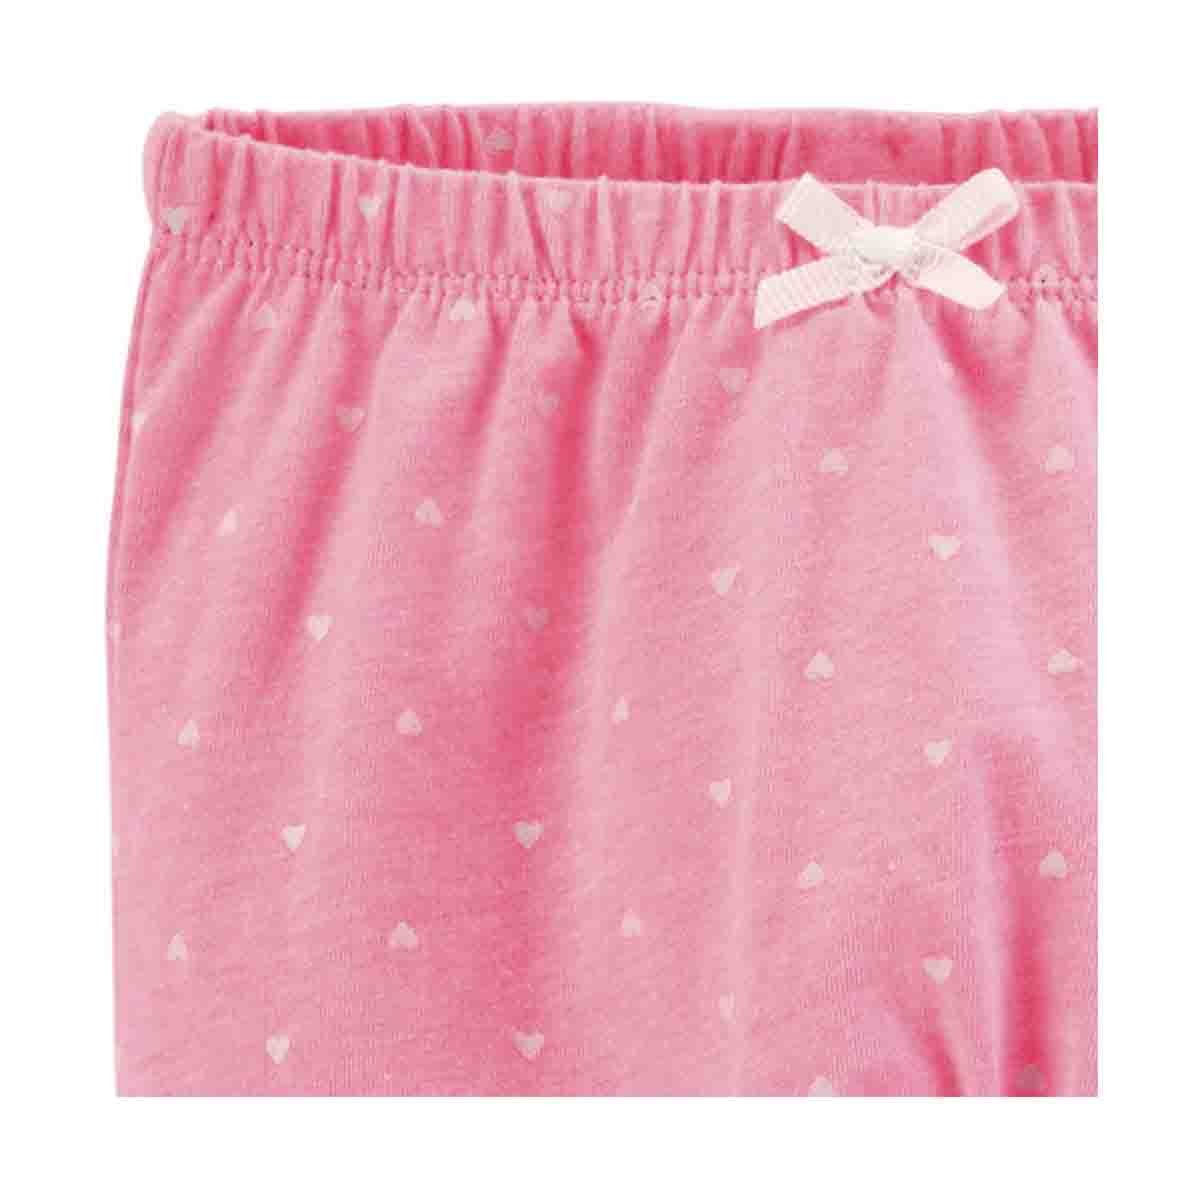 Set de Pantalones Color Rosa Combinado Carters